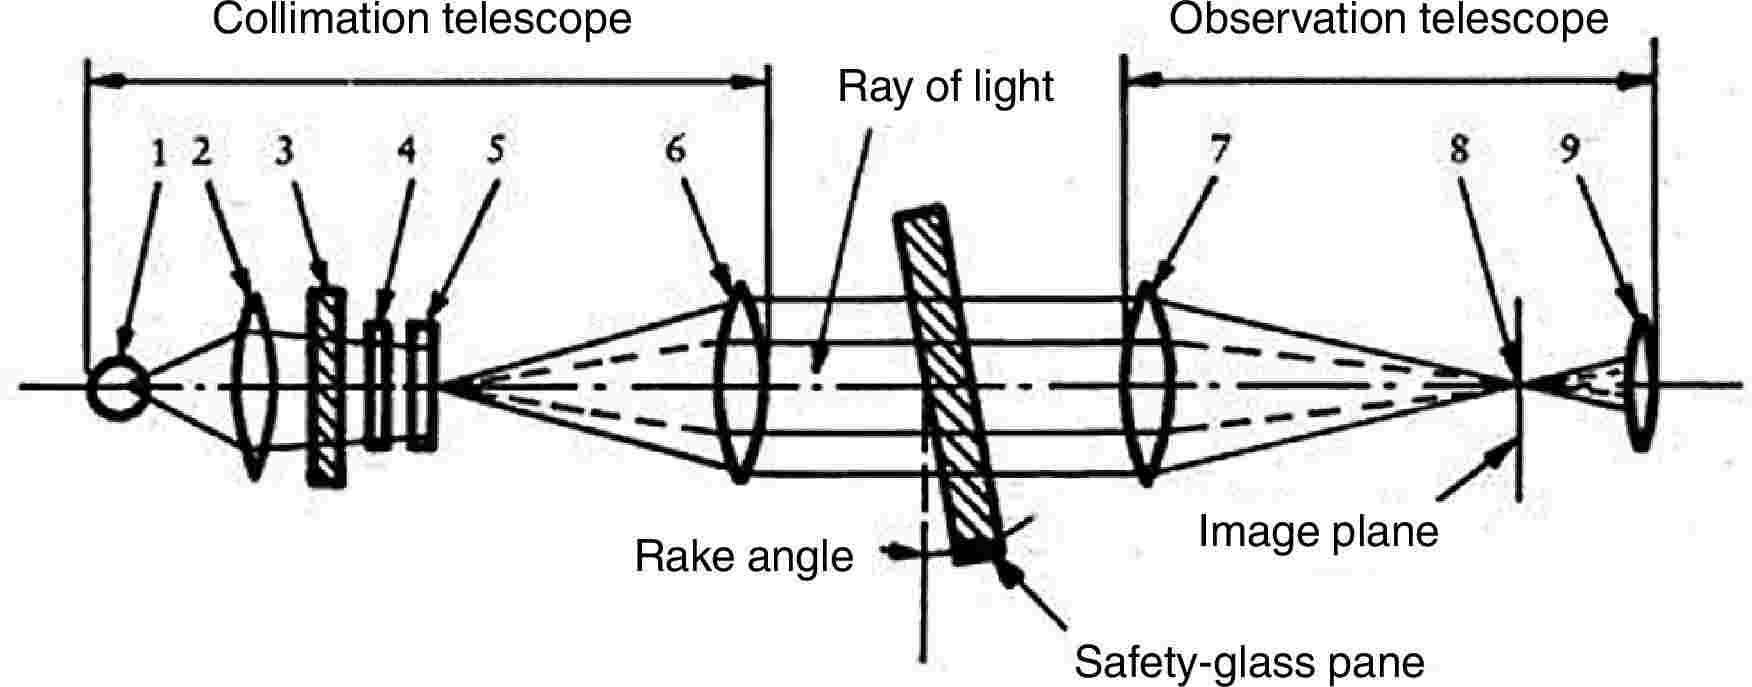 Collimation telescopeRay of lightObservation telescopeRake angleImage planeSafety-glass pane